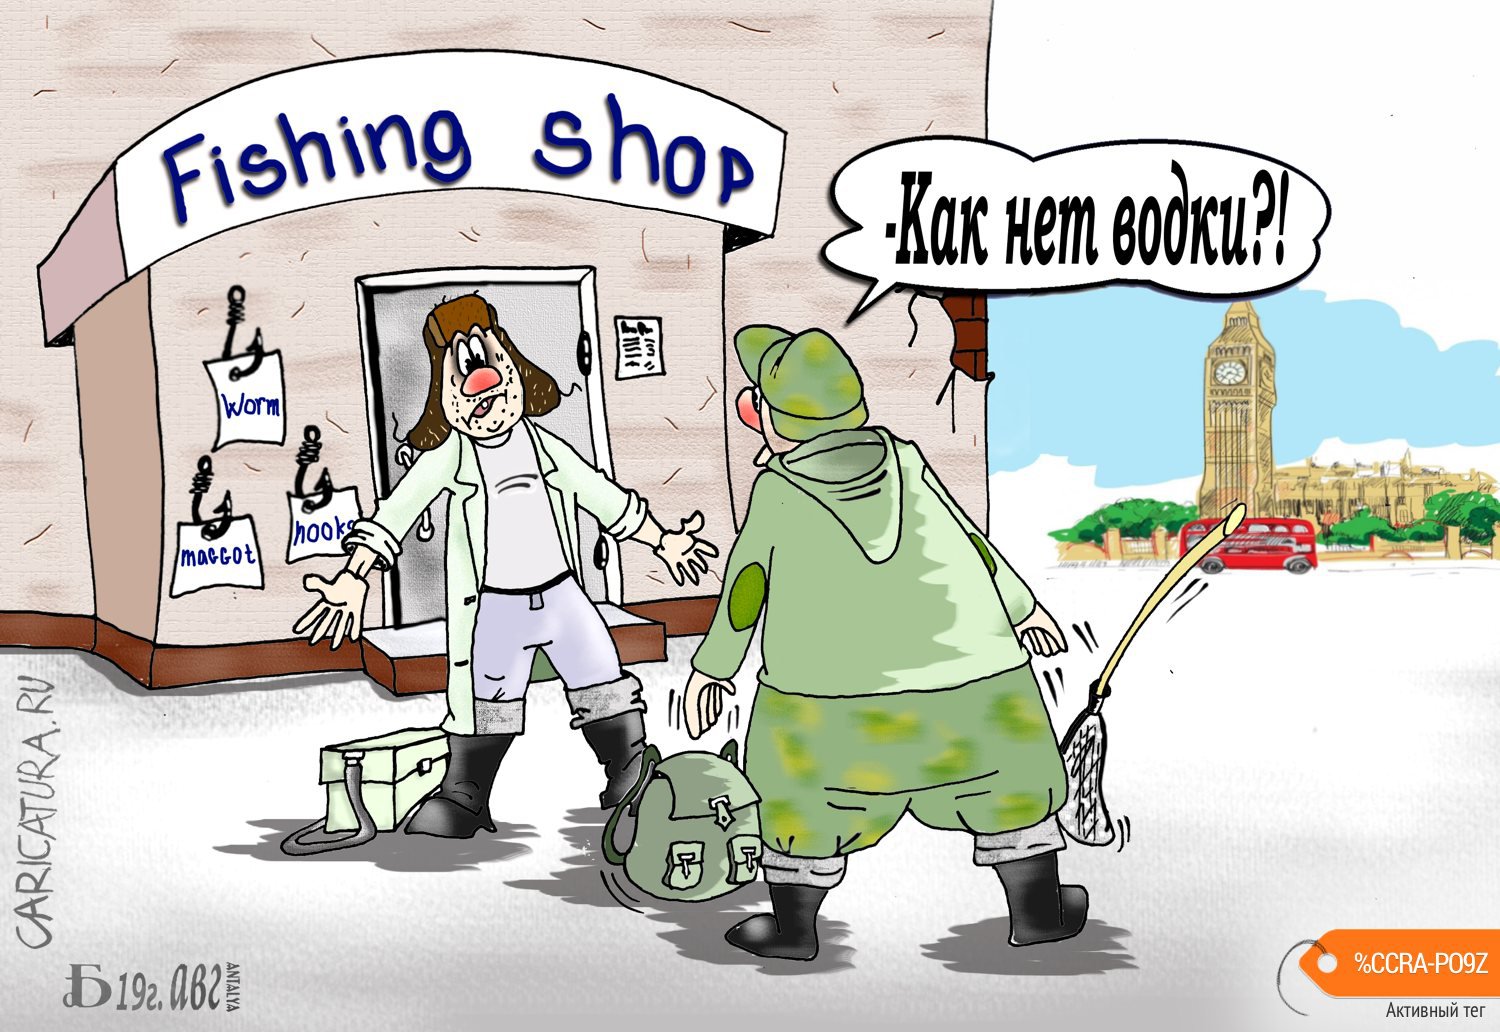 Карикатура "Про не всё для рыбалки", Борис Демин